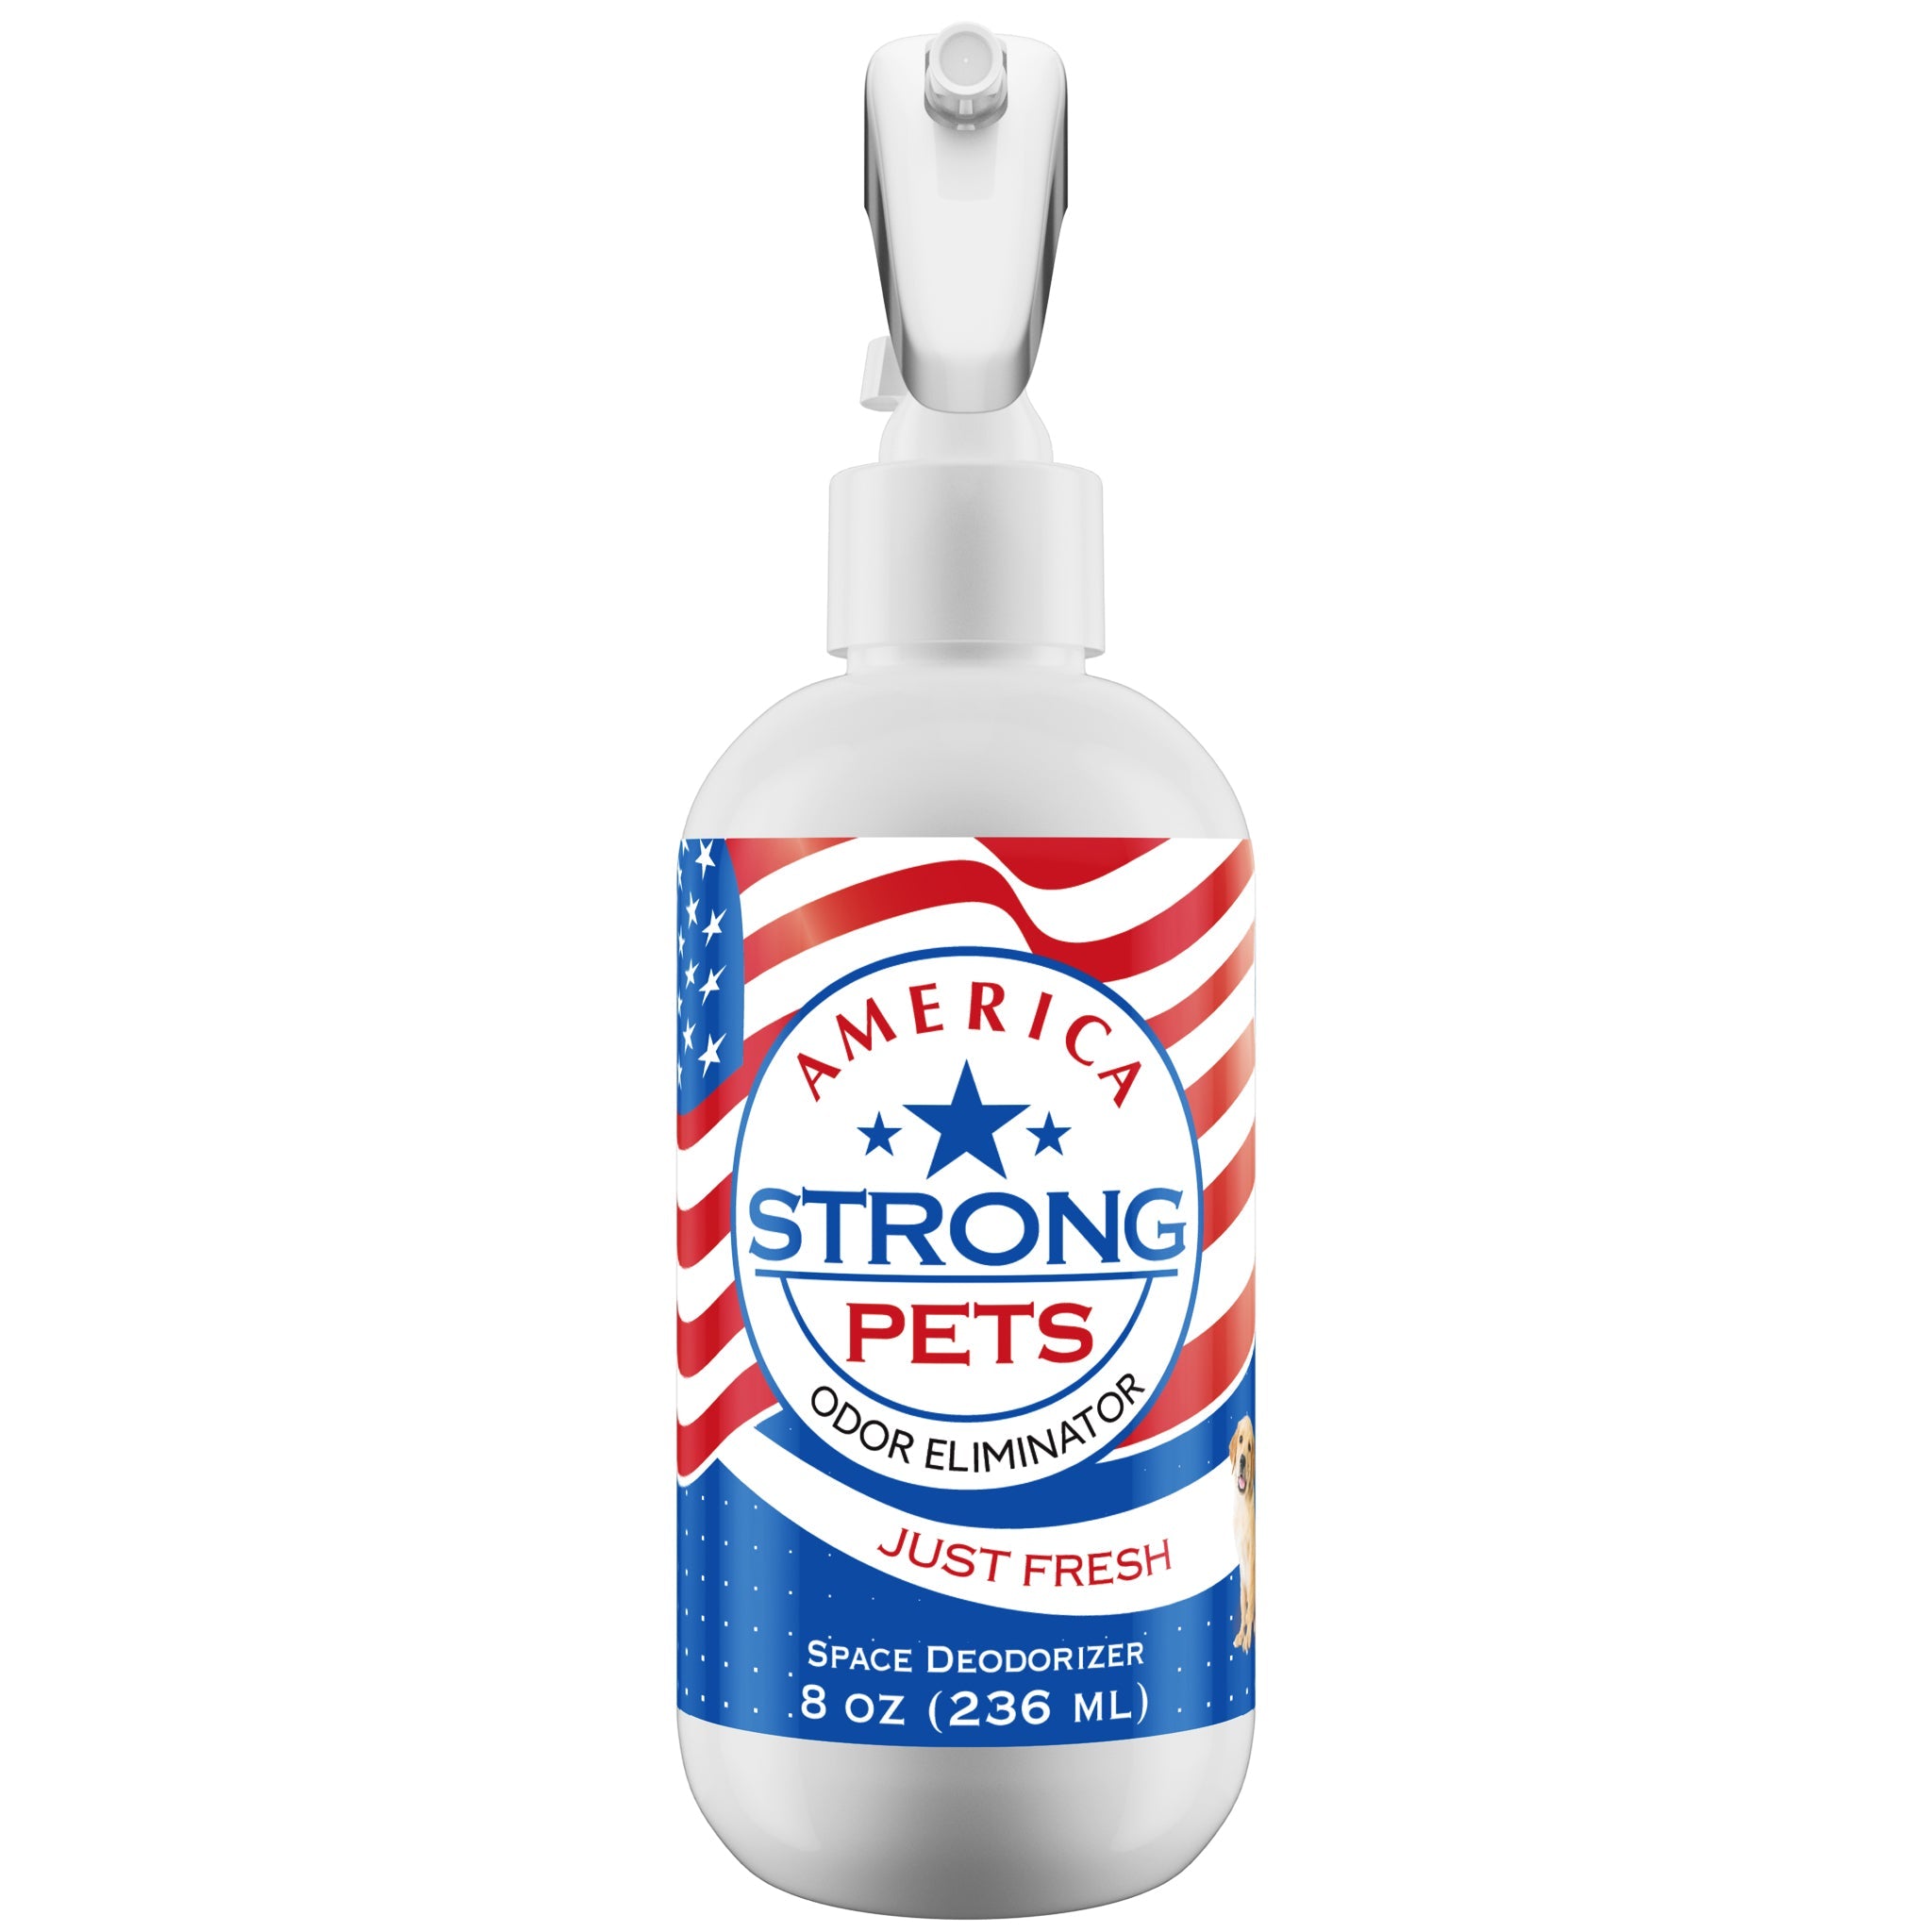 America Strong Pet Odor Eliminator - Just Fresh Scent Size: 8 fl oz